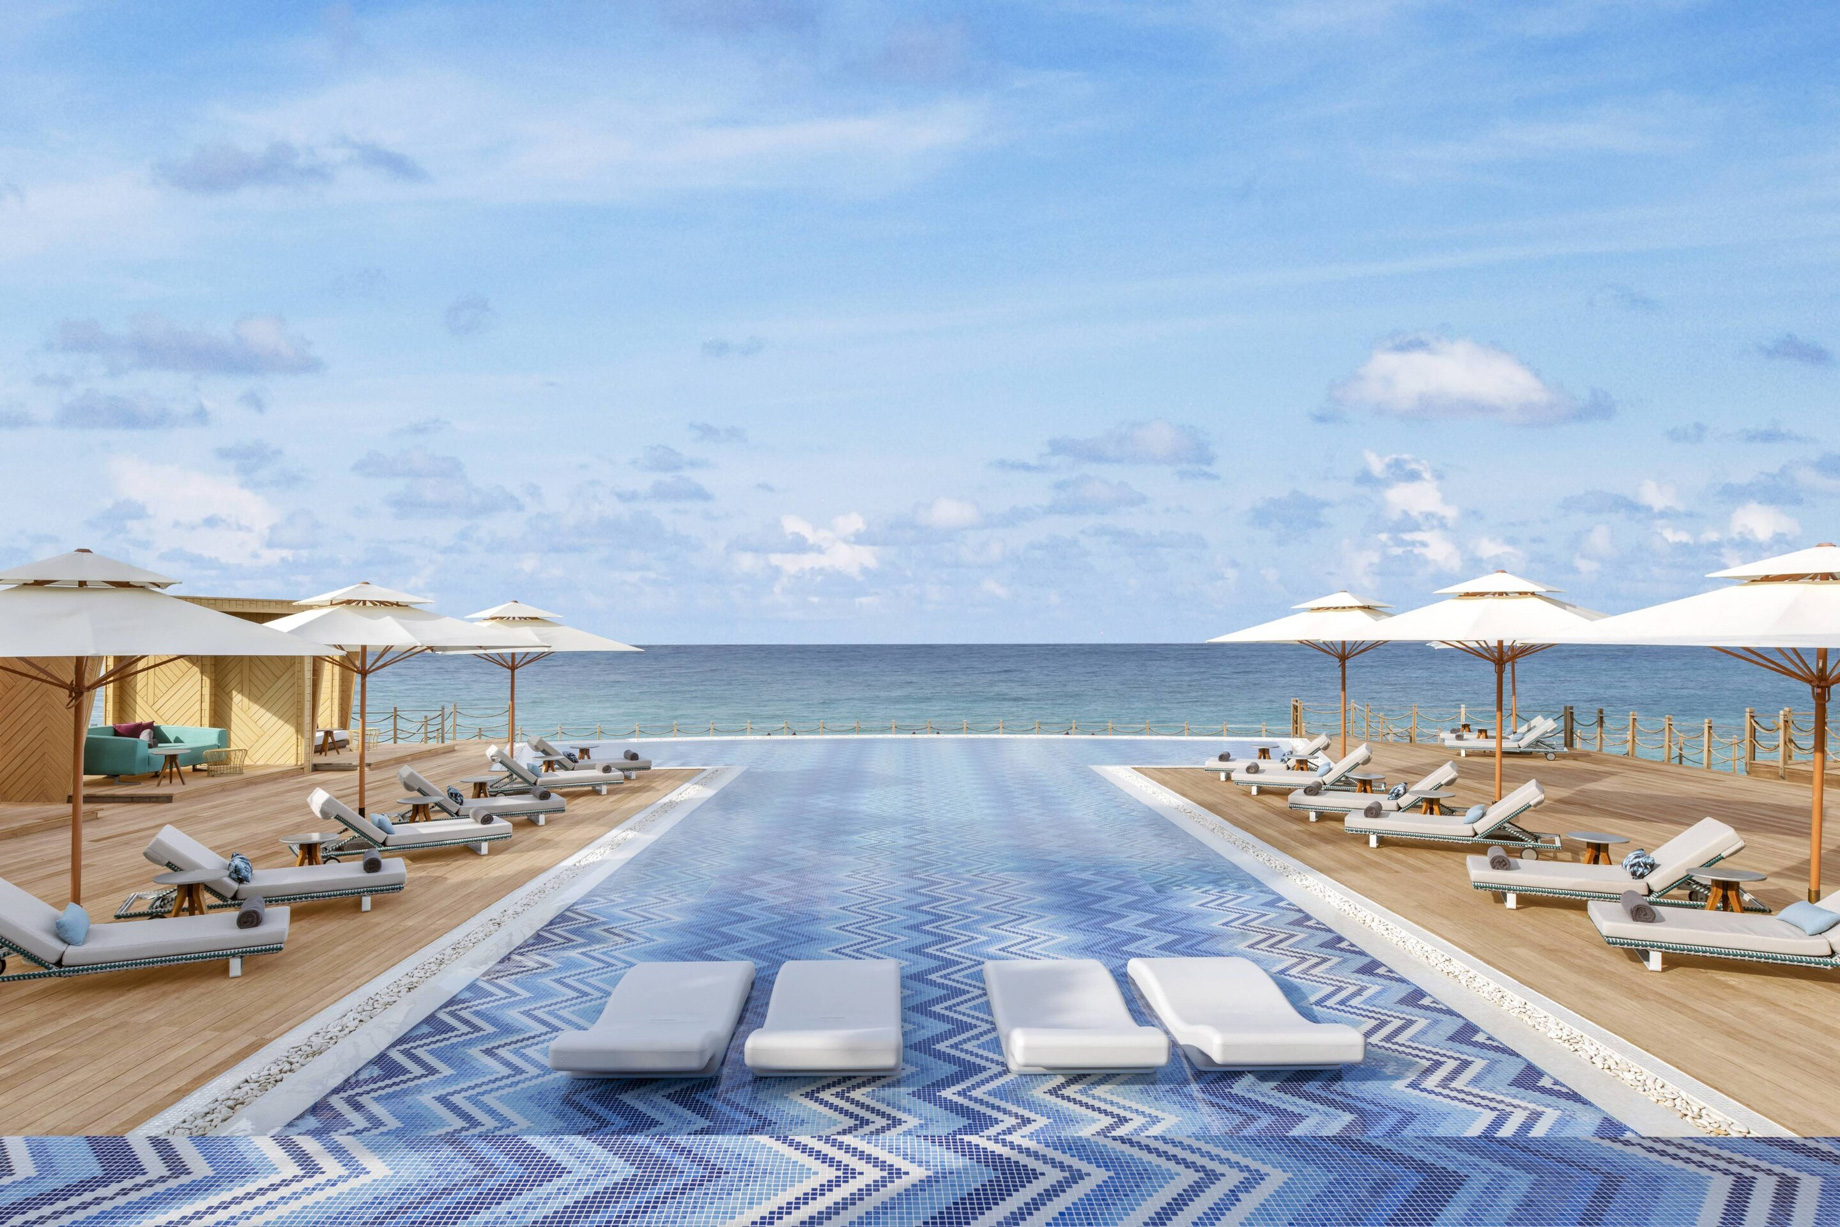 JW Marriott Maldives Resort & Spa – Shaviyani Atoll, Maldives – Horizon Pool